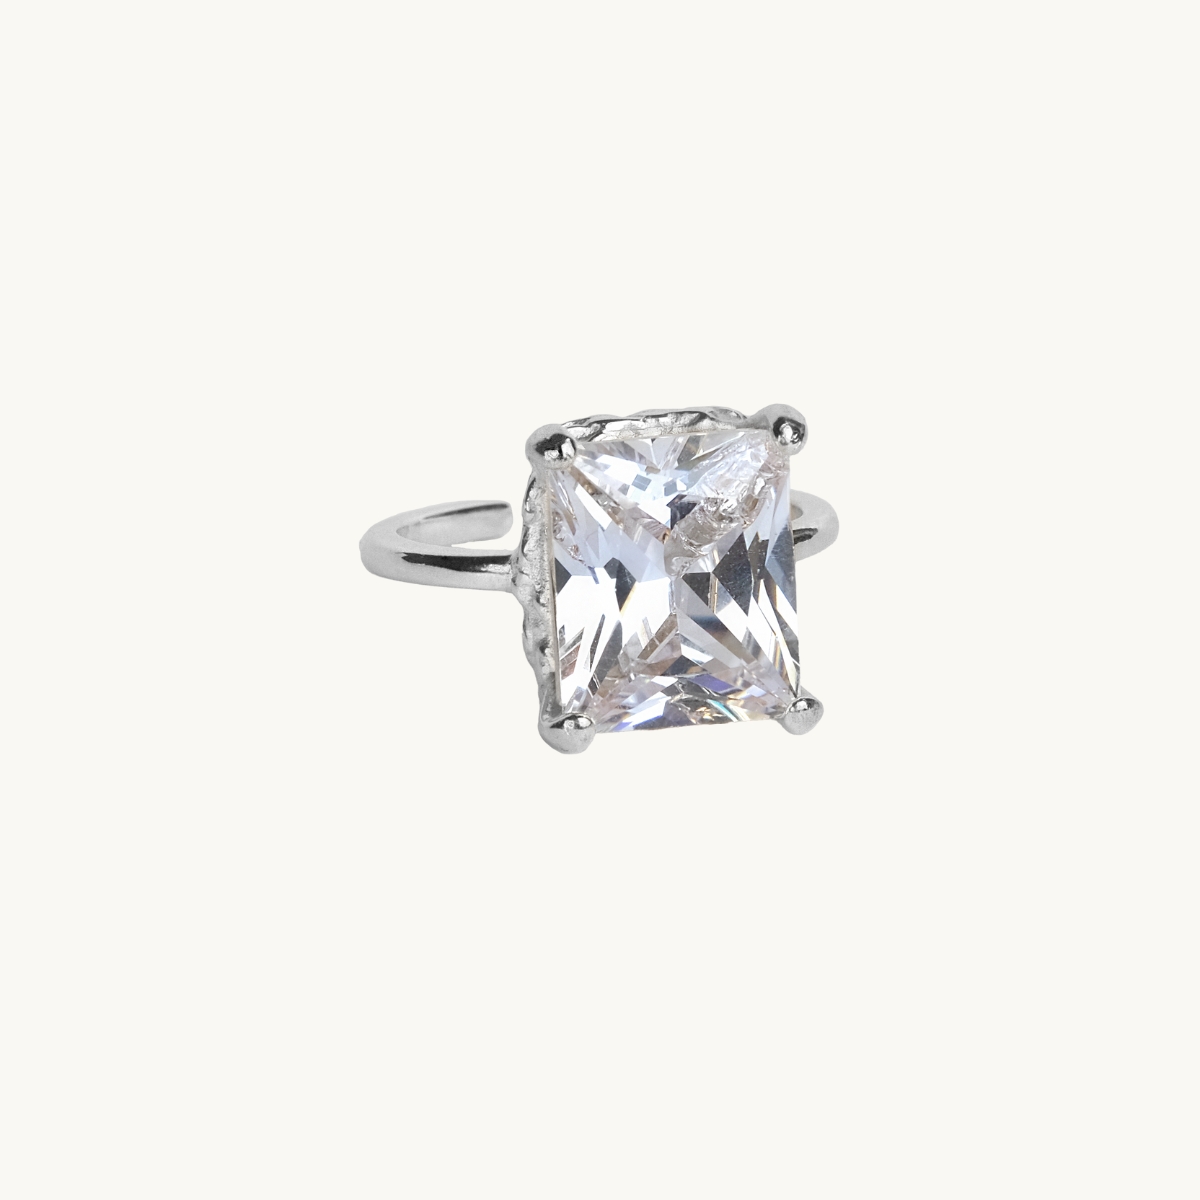 En ring i silver med en stor vit diamant